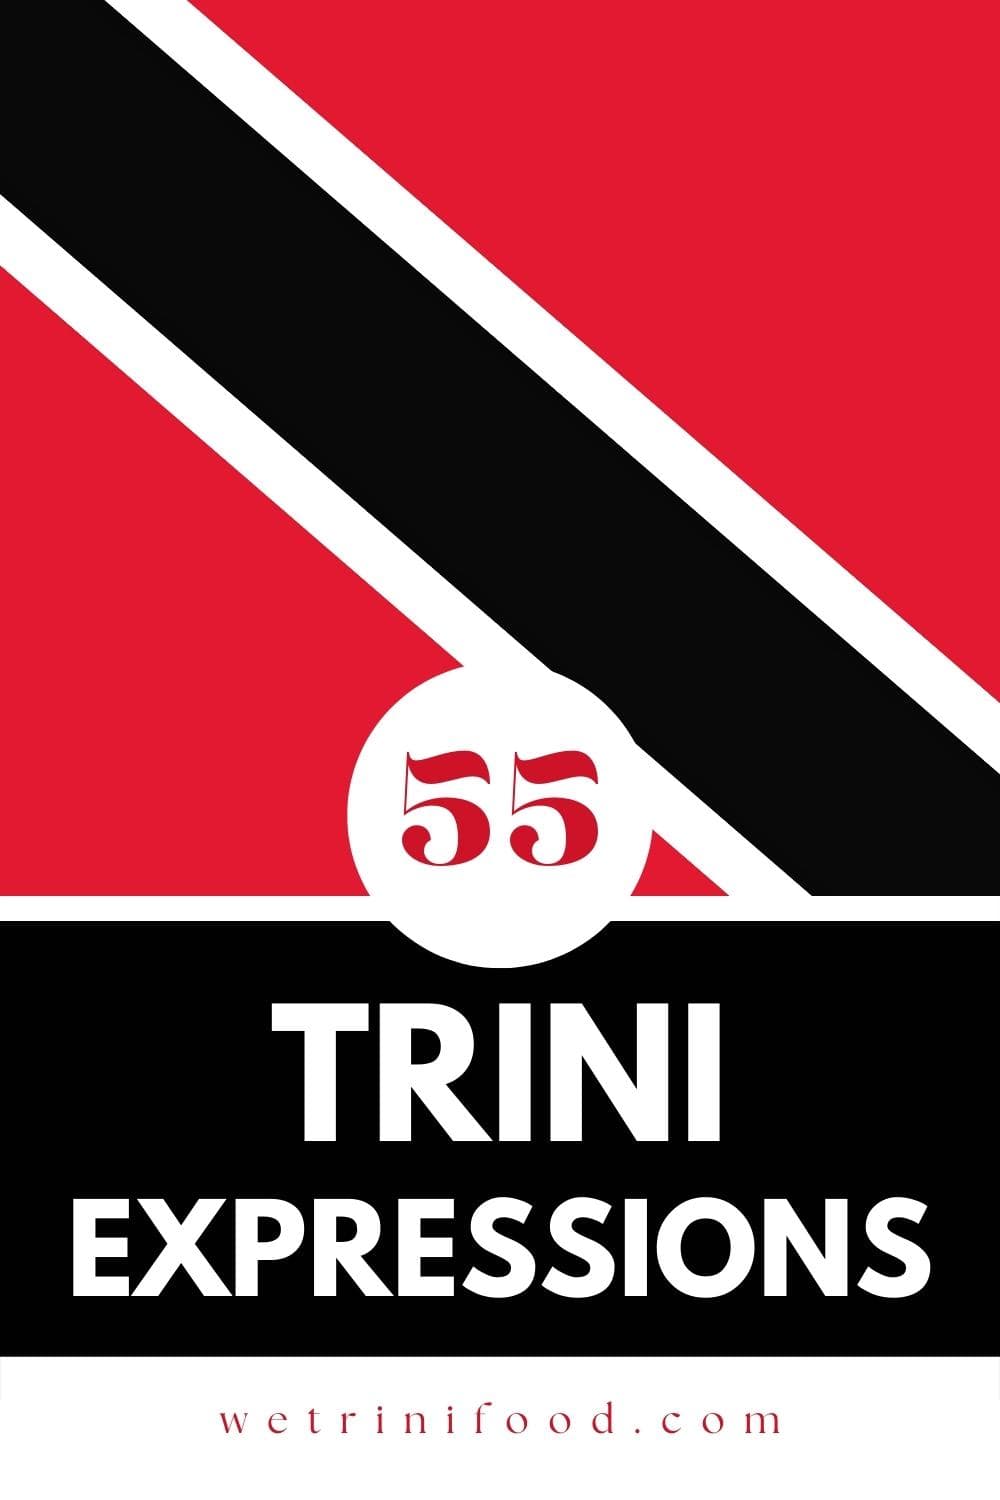 55 trini expressions